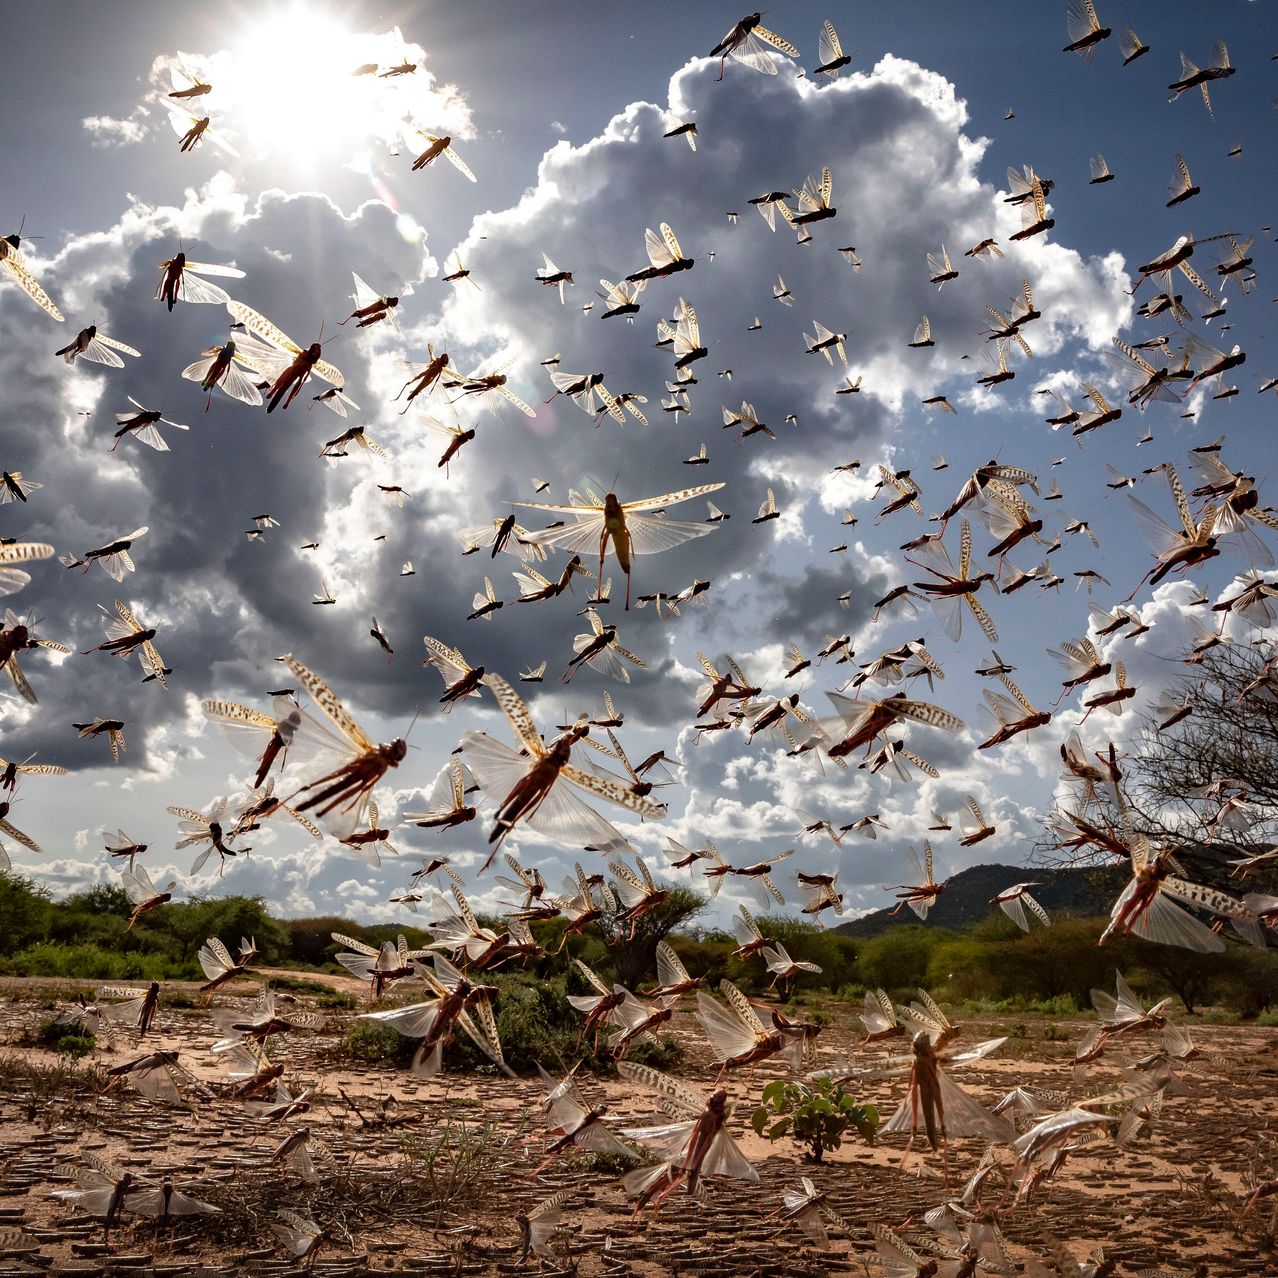 Locust swarm turns into war operation